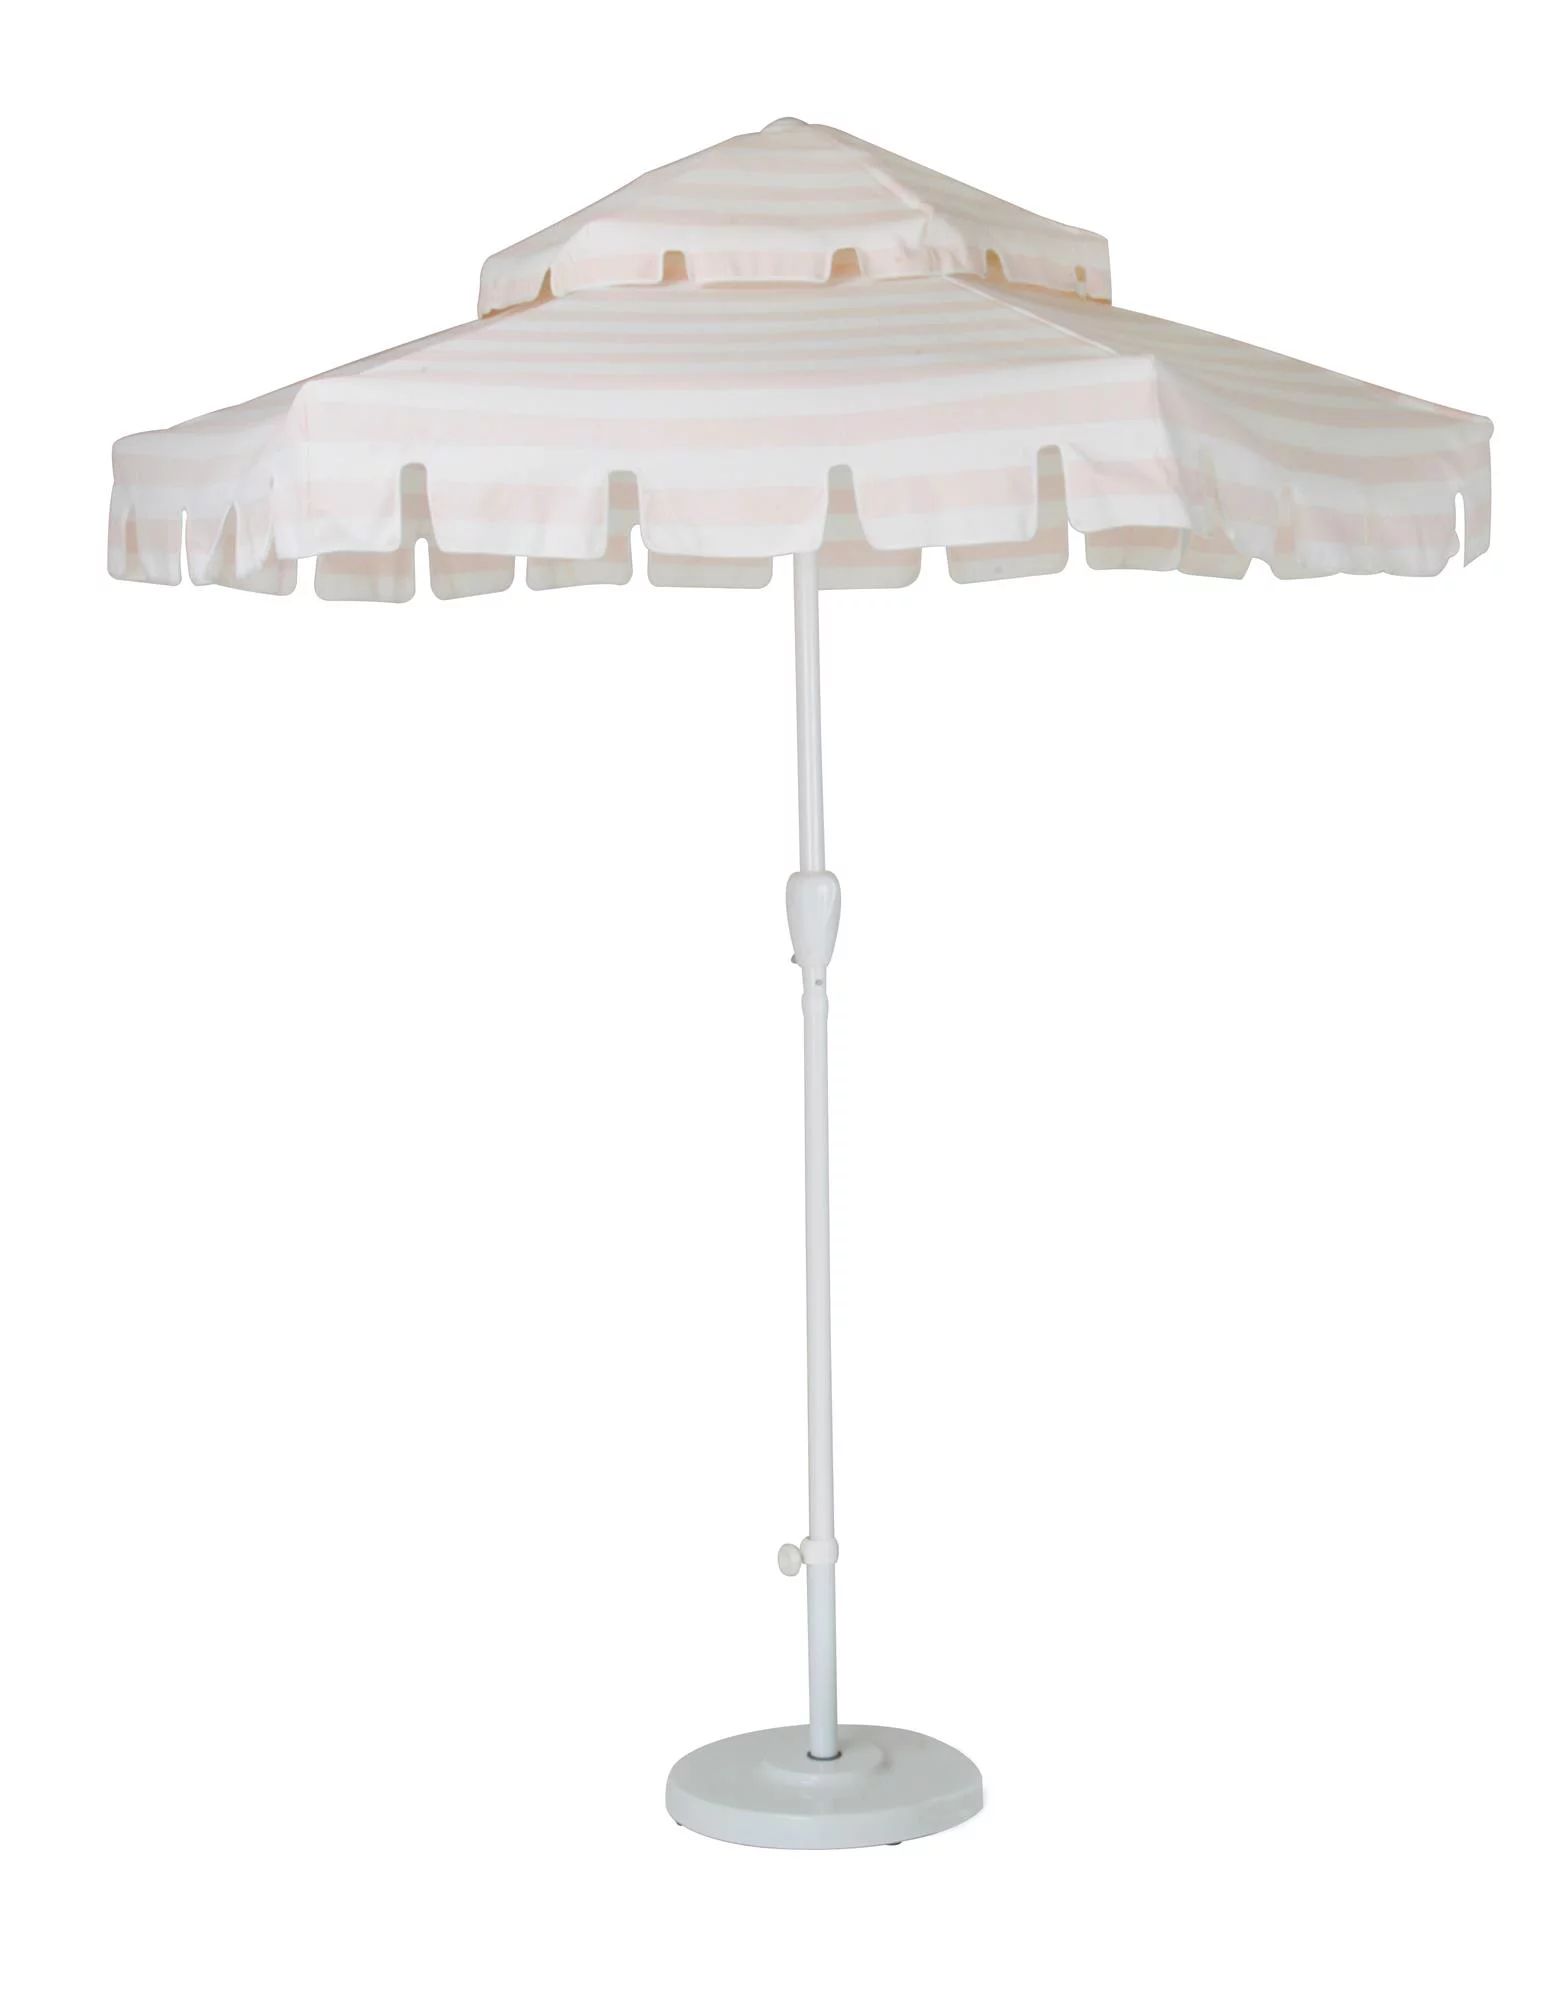 Novogratz Poolside Gossip Collection, Connie Outdoor Umbrella, Rosewater and White Stripes | Walmart (US)